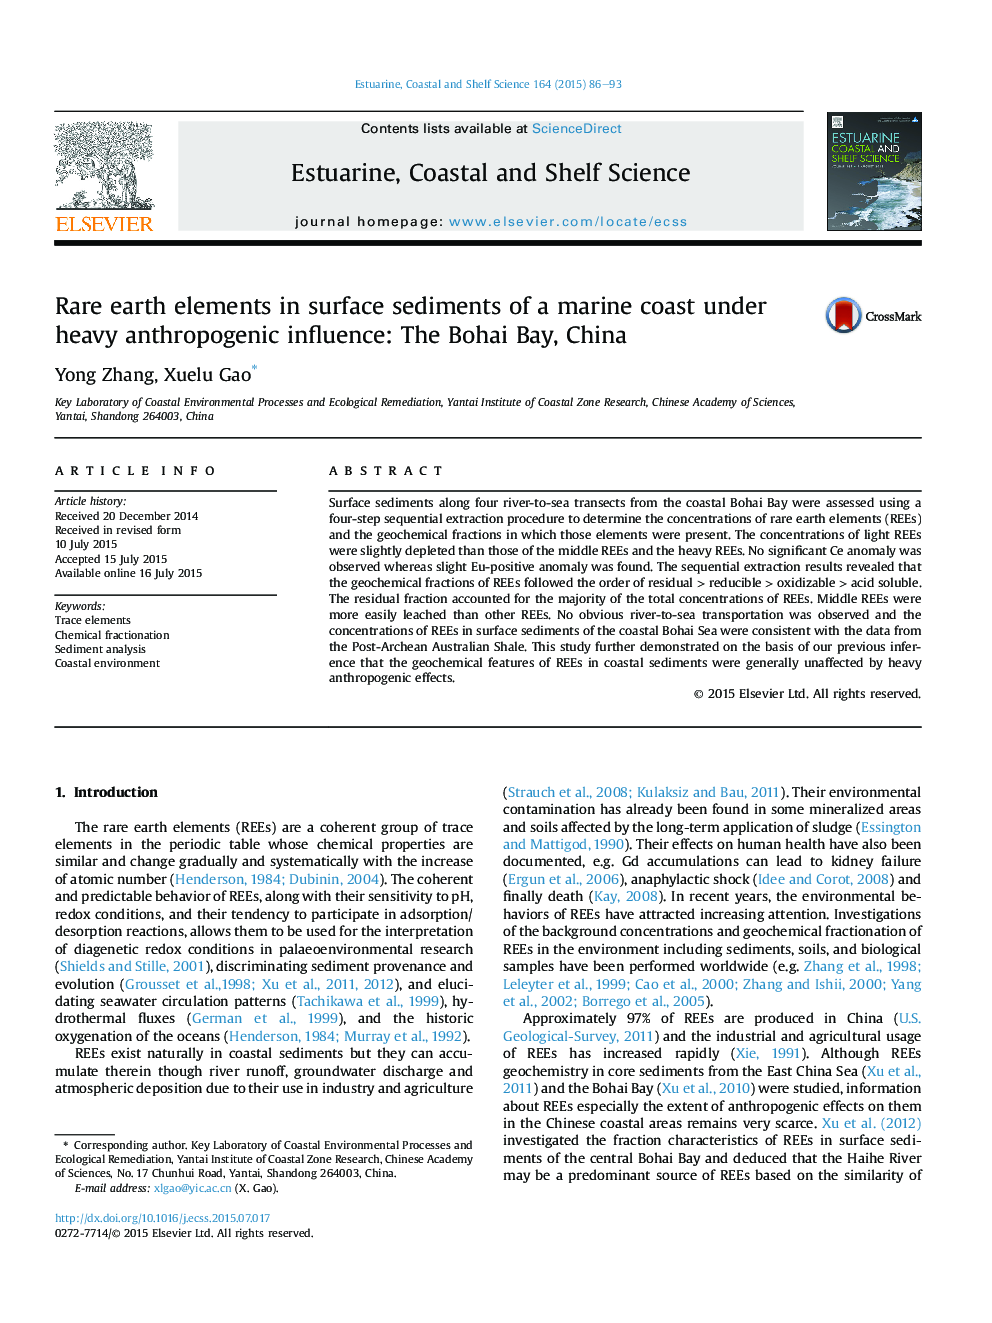 Rare earth elements in surface sediments of a marine coast under heavy anthropogenic influence: The Bohai Bay, China